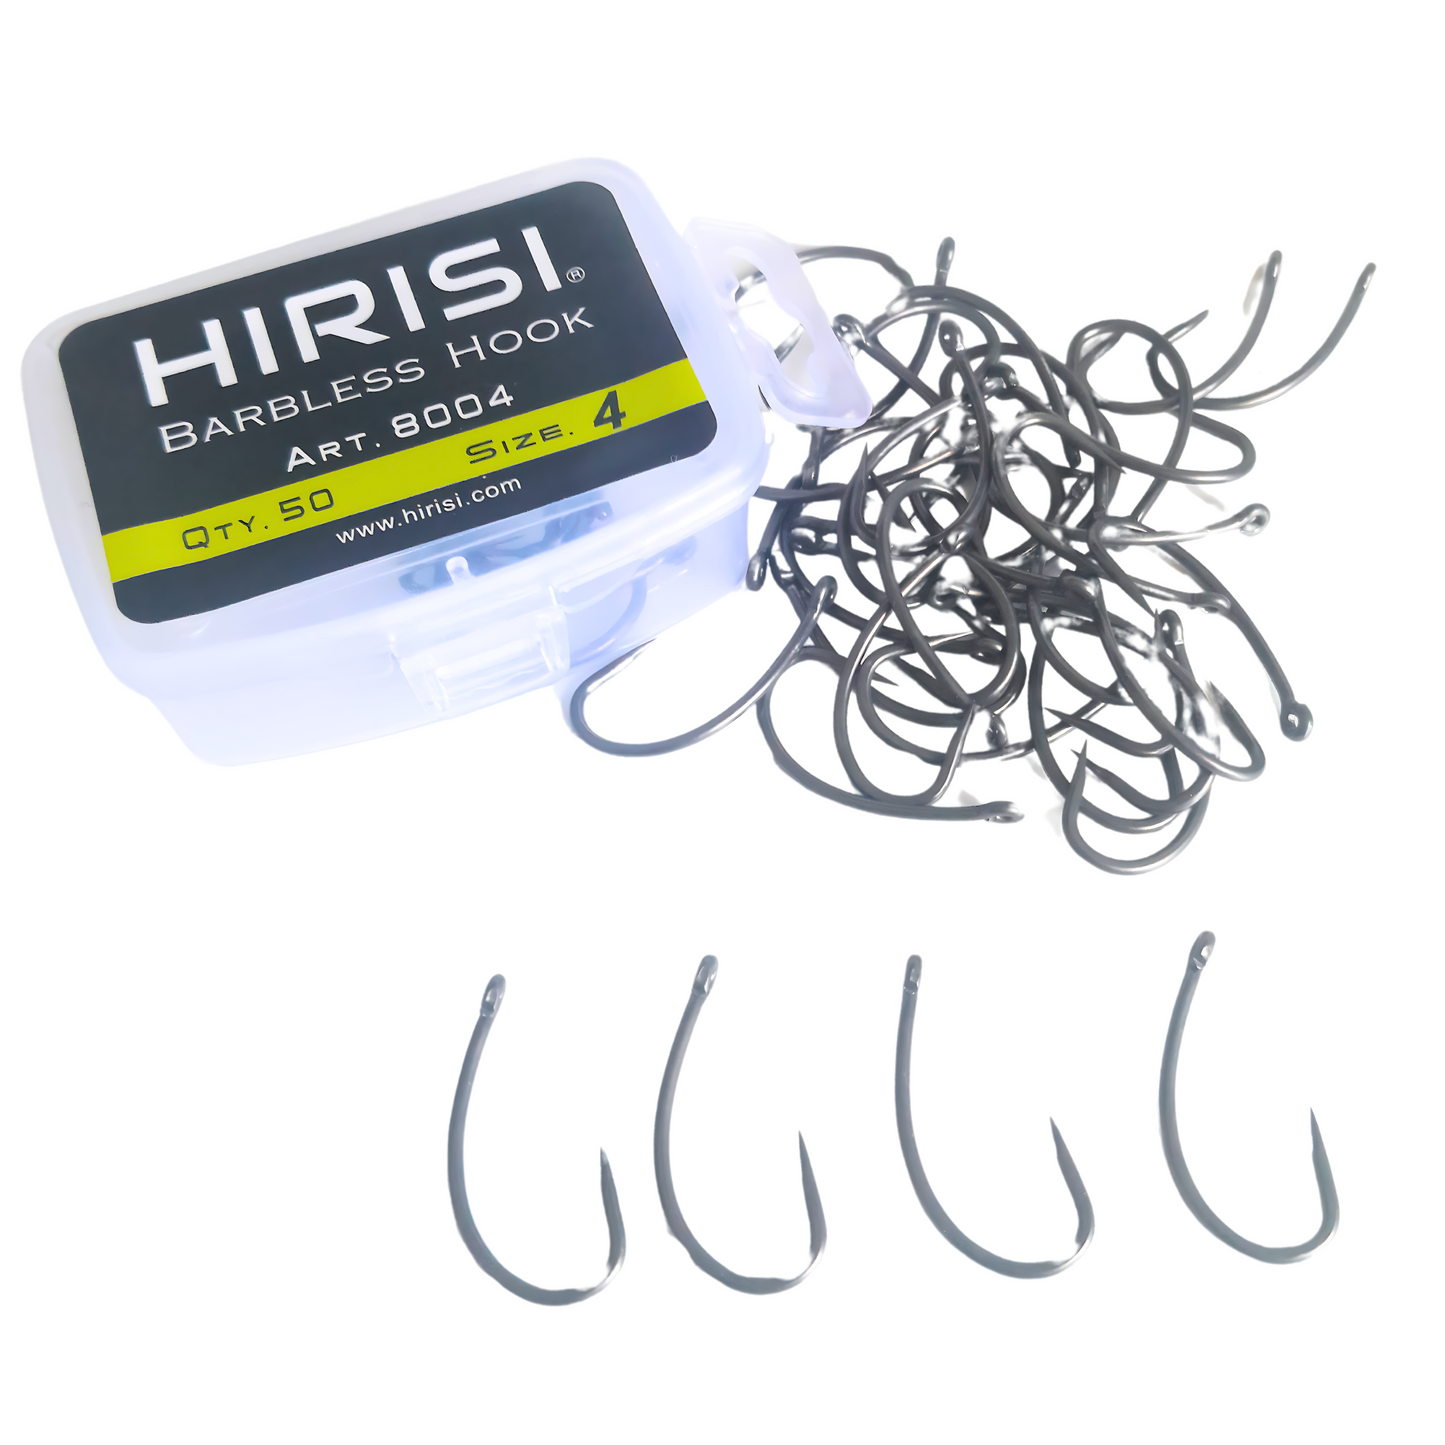 Hirisi Carbon Steel Hooks 8004 | 50 Pieces | No. 4